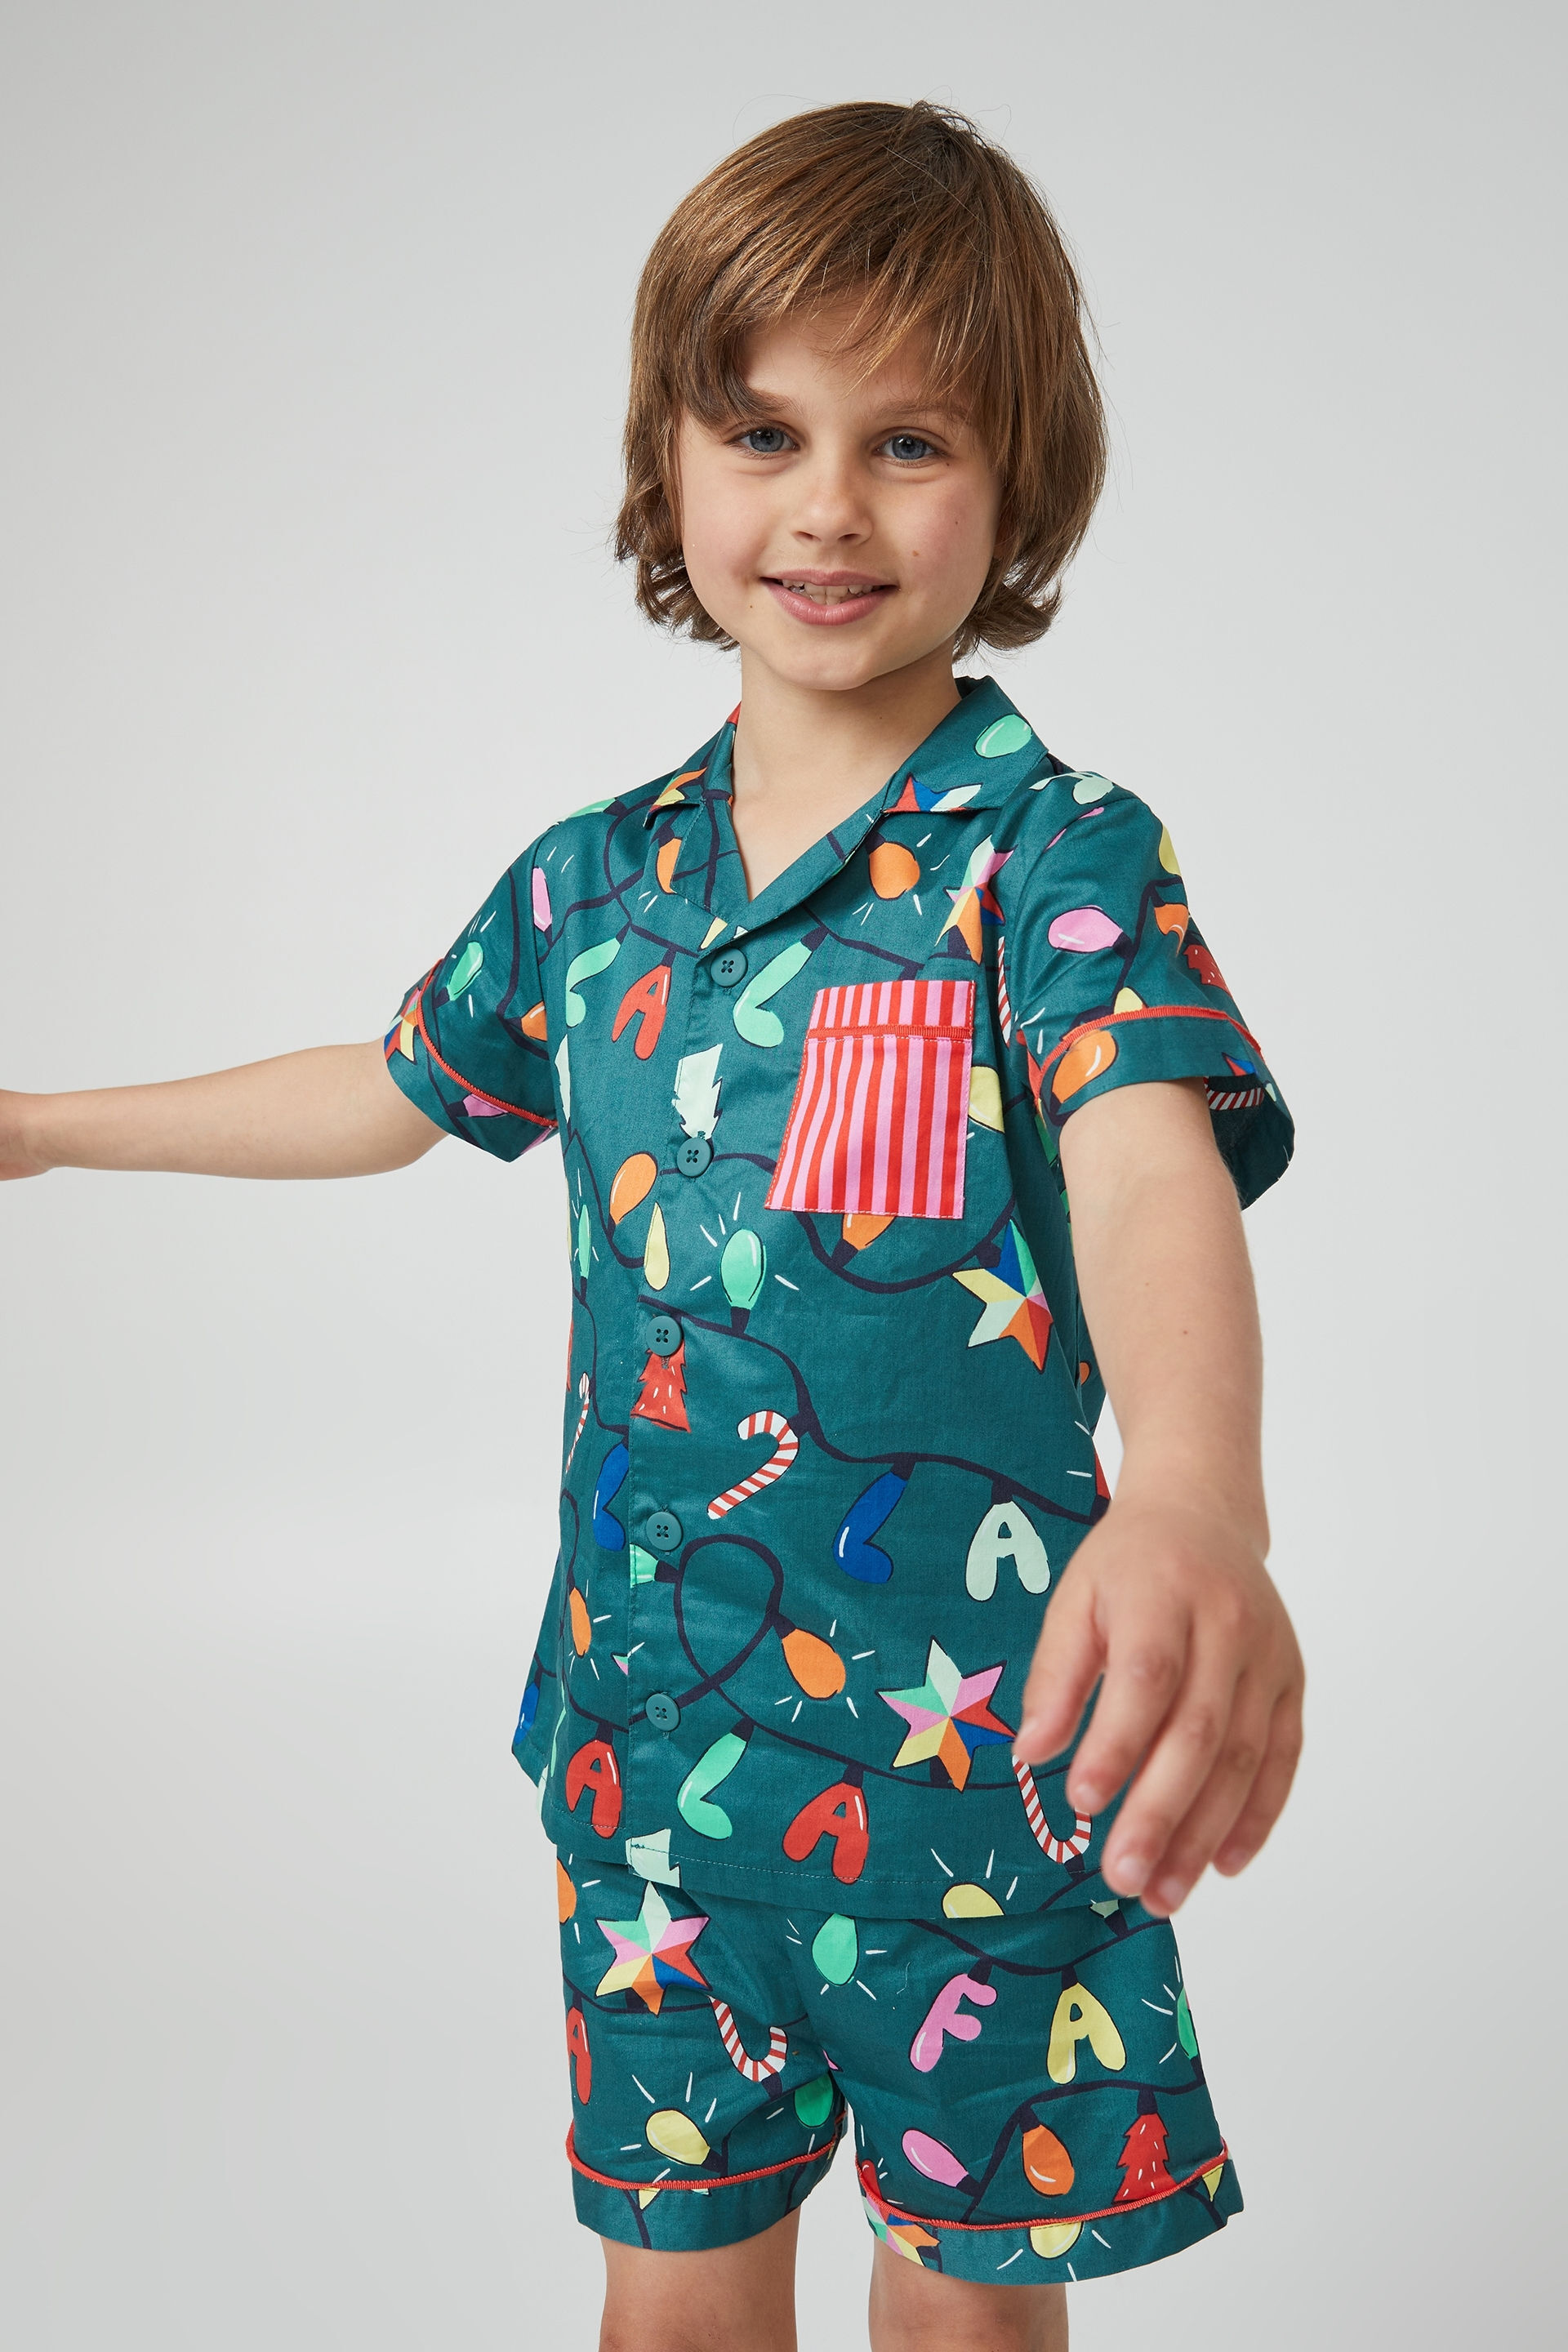 Boys Pyjamas Set Dinosaur Print Kids Pjs Pajama Long Sleeve Cotton Sleepewar Tops Shirts & Pants Nightwear Children Outfit 